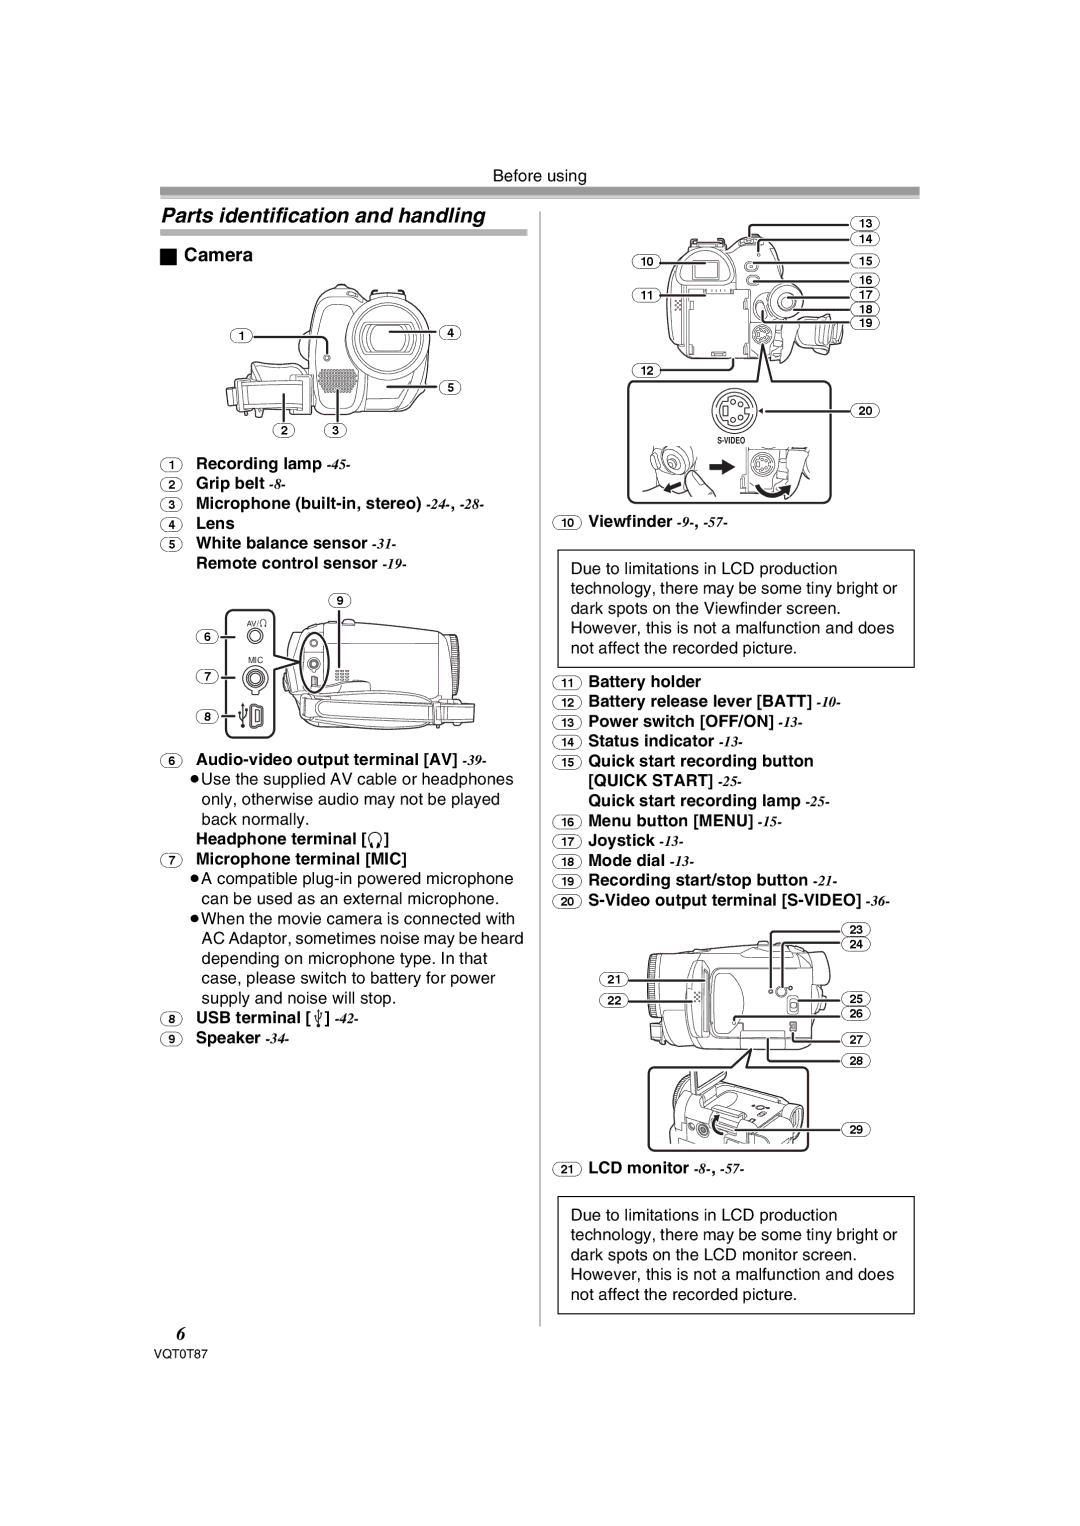 Panasonic NV-GS180EB operating instructions Parts identification and handling, Camera 